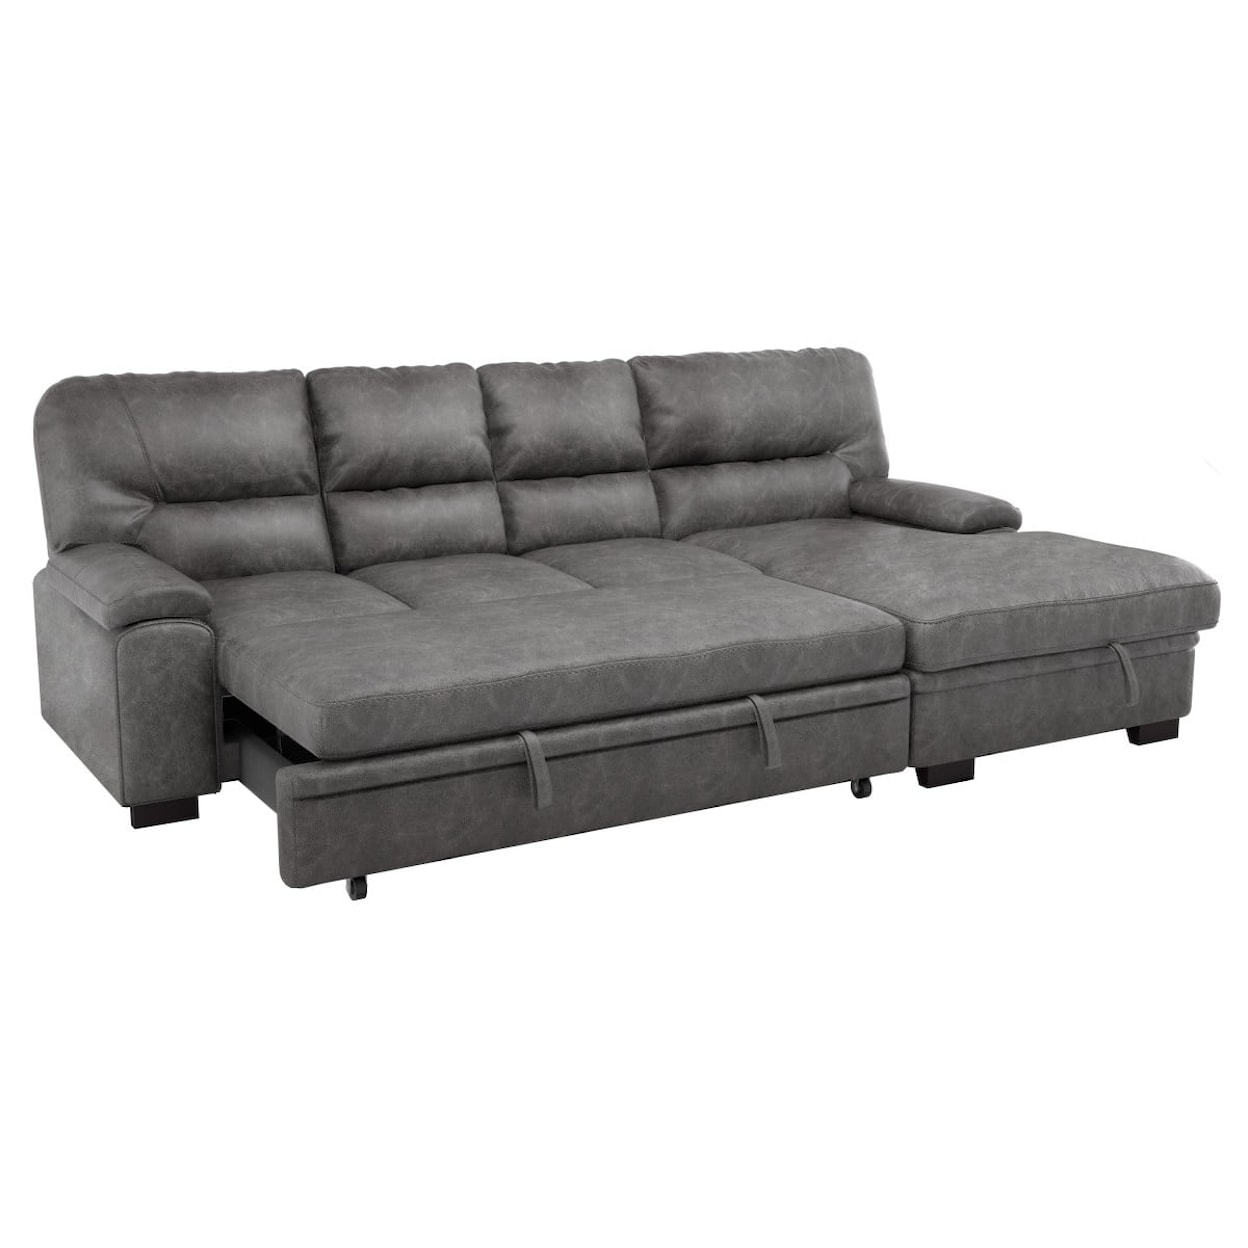 Homelegance Michigan 2-Piece Sectional Sofa